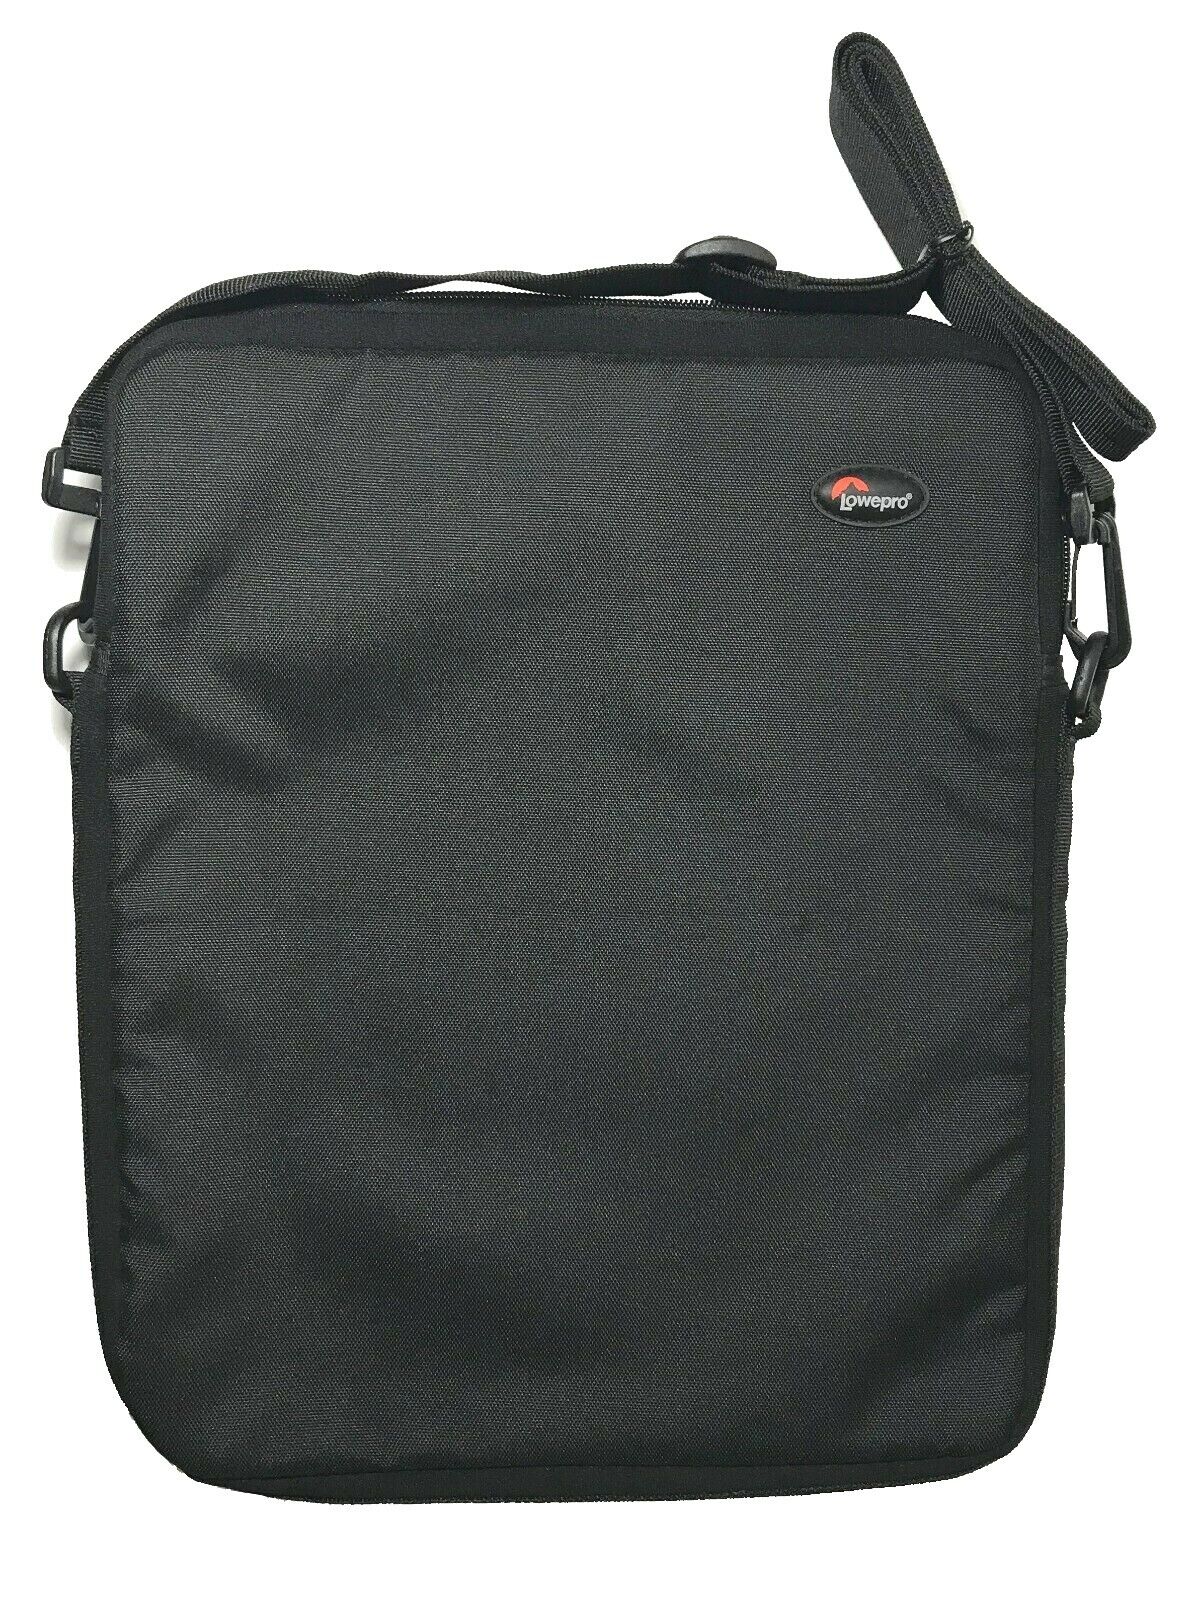 NEW Lowepro Laptop Tablet 14" x 12" x 2" Black Zipper Shoulder Bag Sleeve